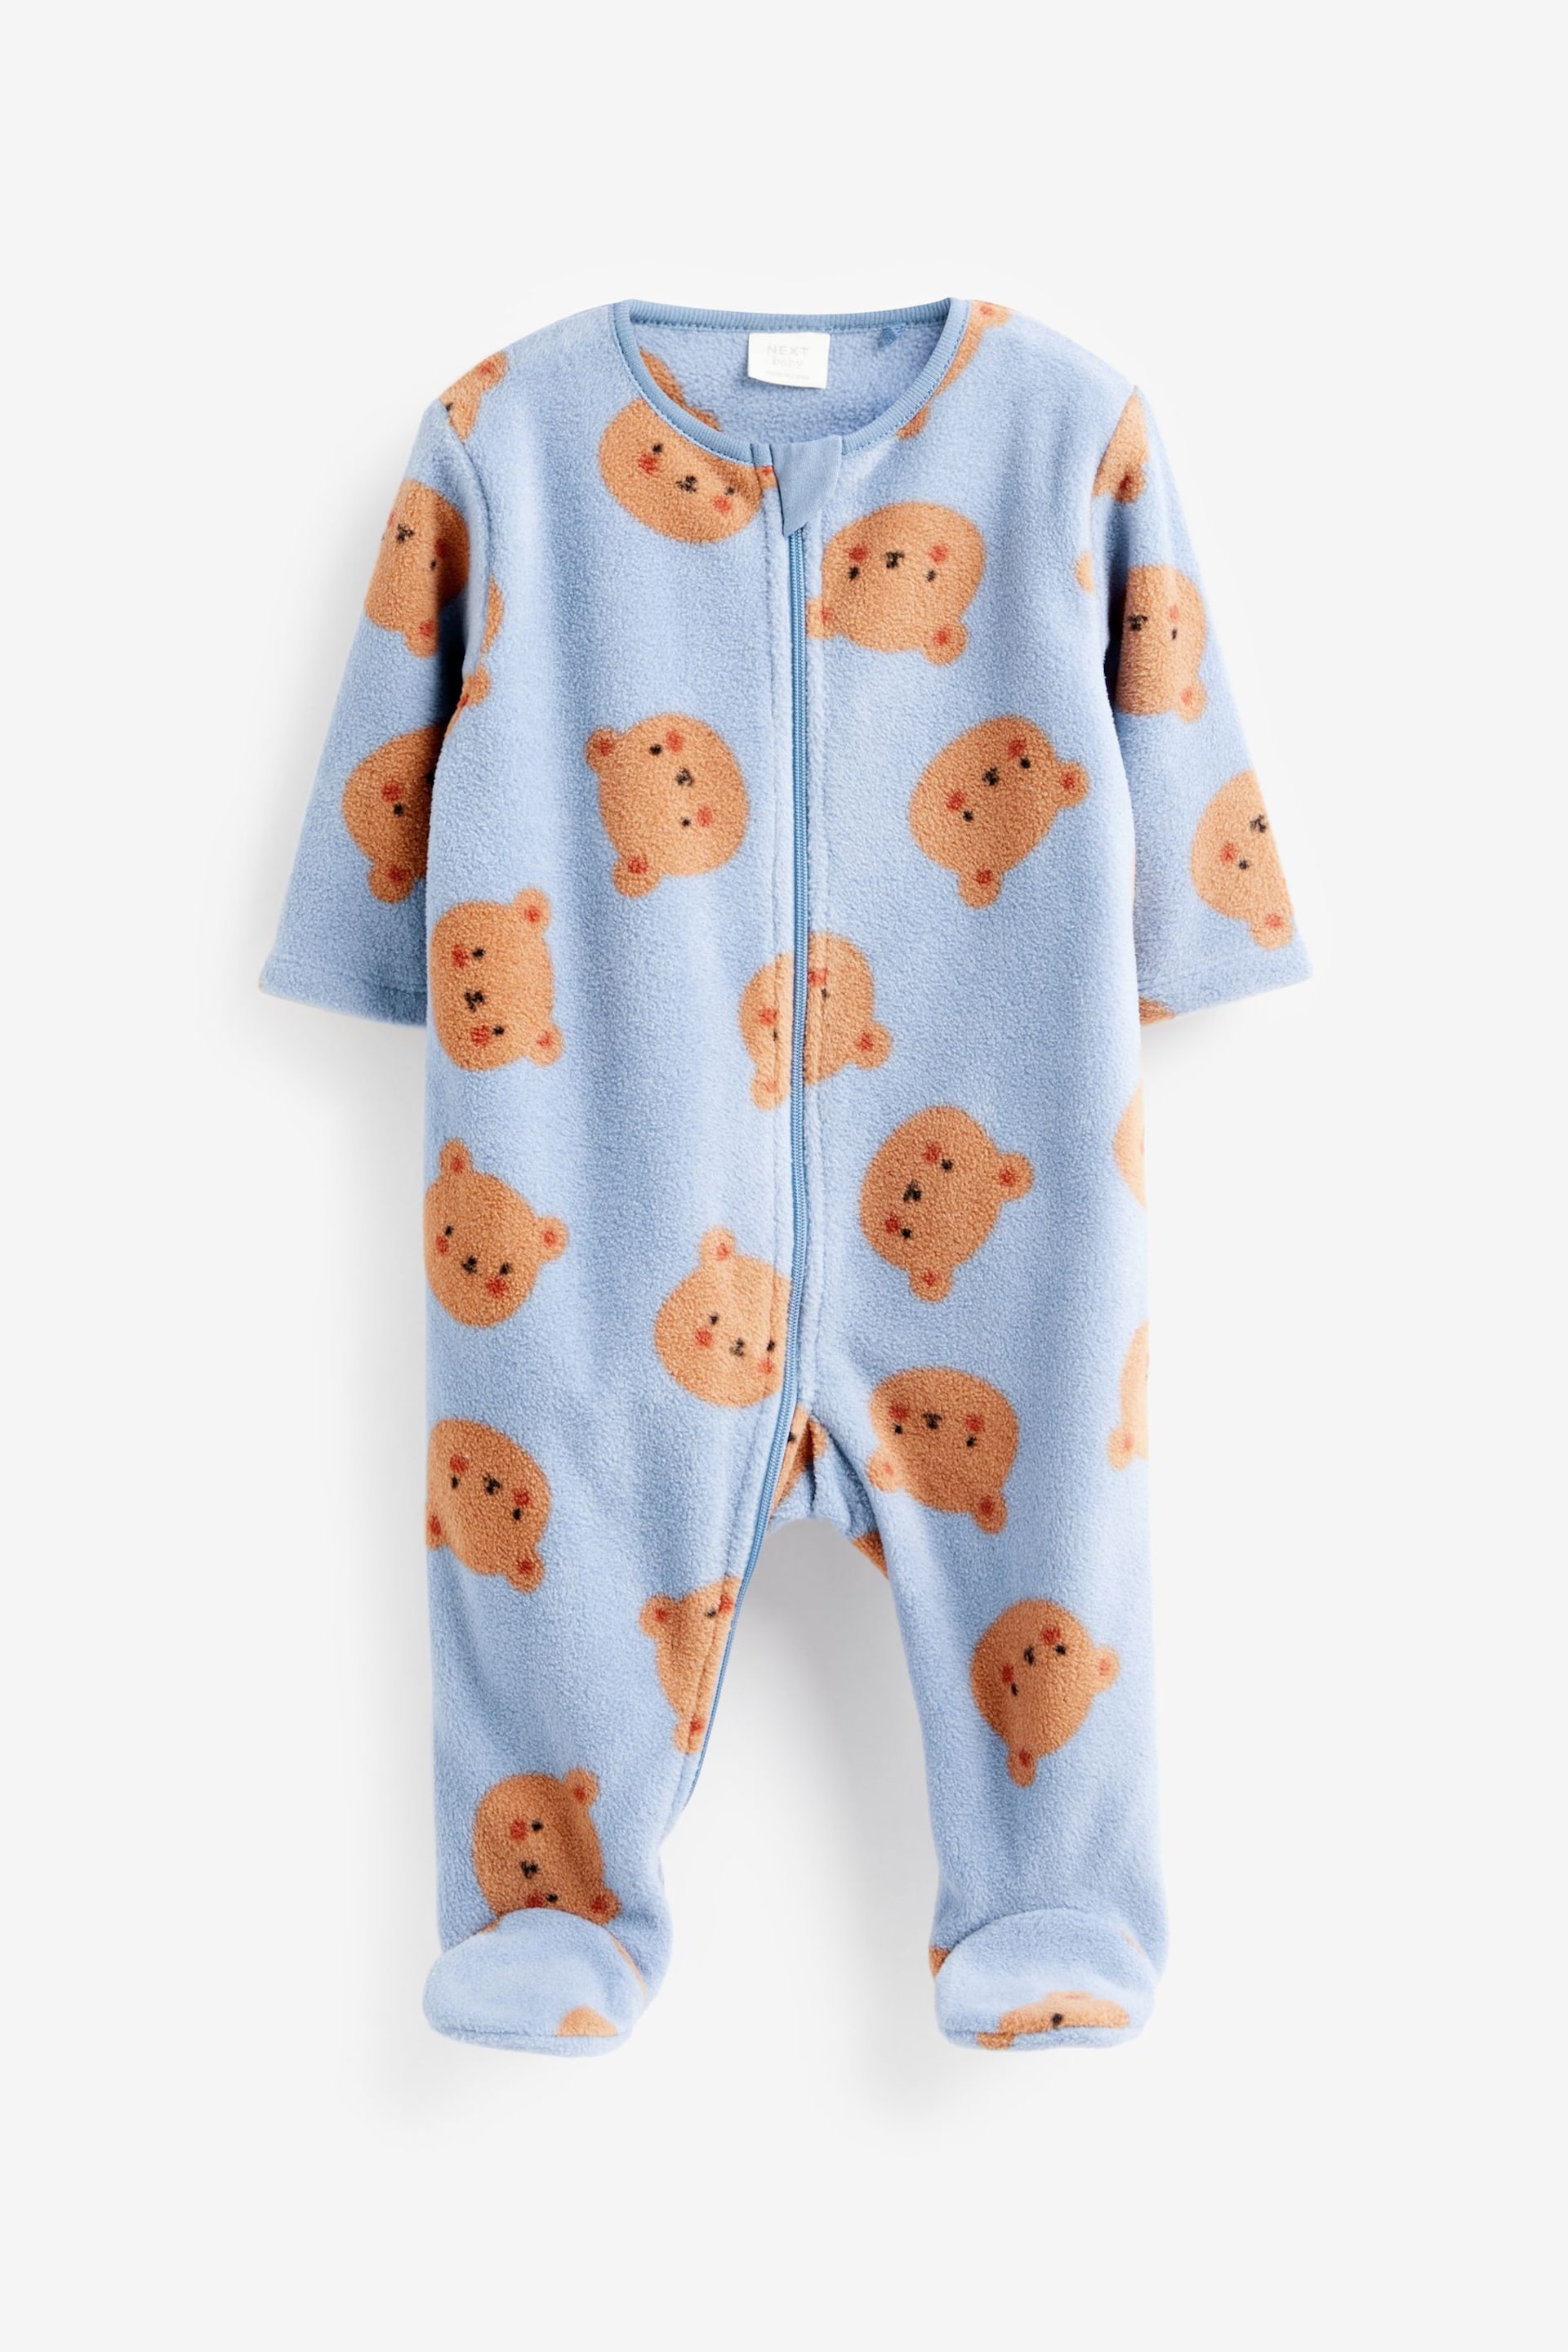 Blue Fleece Baby Sleepsuits 2 Pack - Image 2 of 4